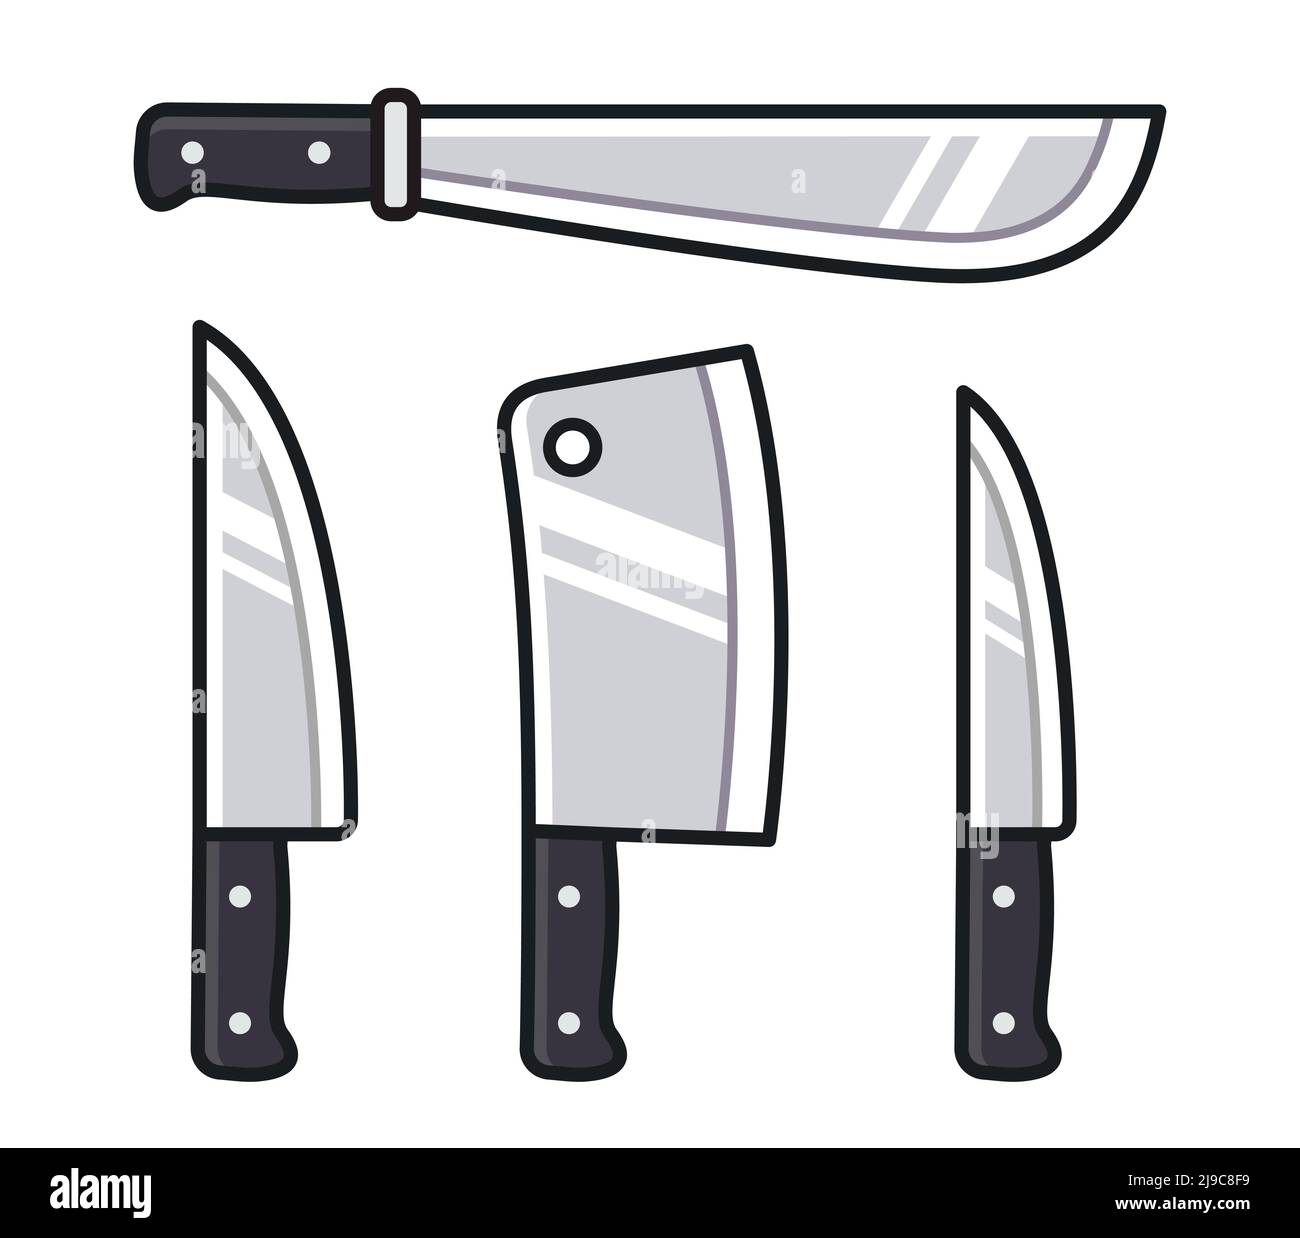 https://c8.alamy.com/comp/2J9C8F9/cartoon-knife-icon-set-kitchen-knives-meat-cleaver-machete-vector-clip-art-illustration-set-2J9C8F9.jpg